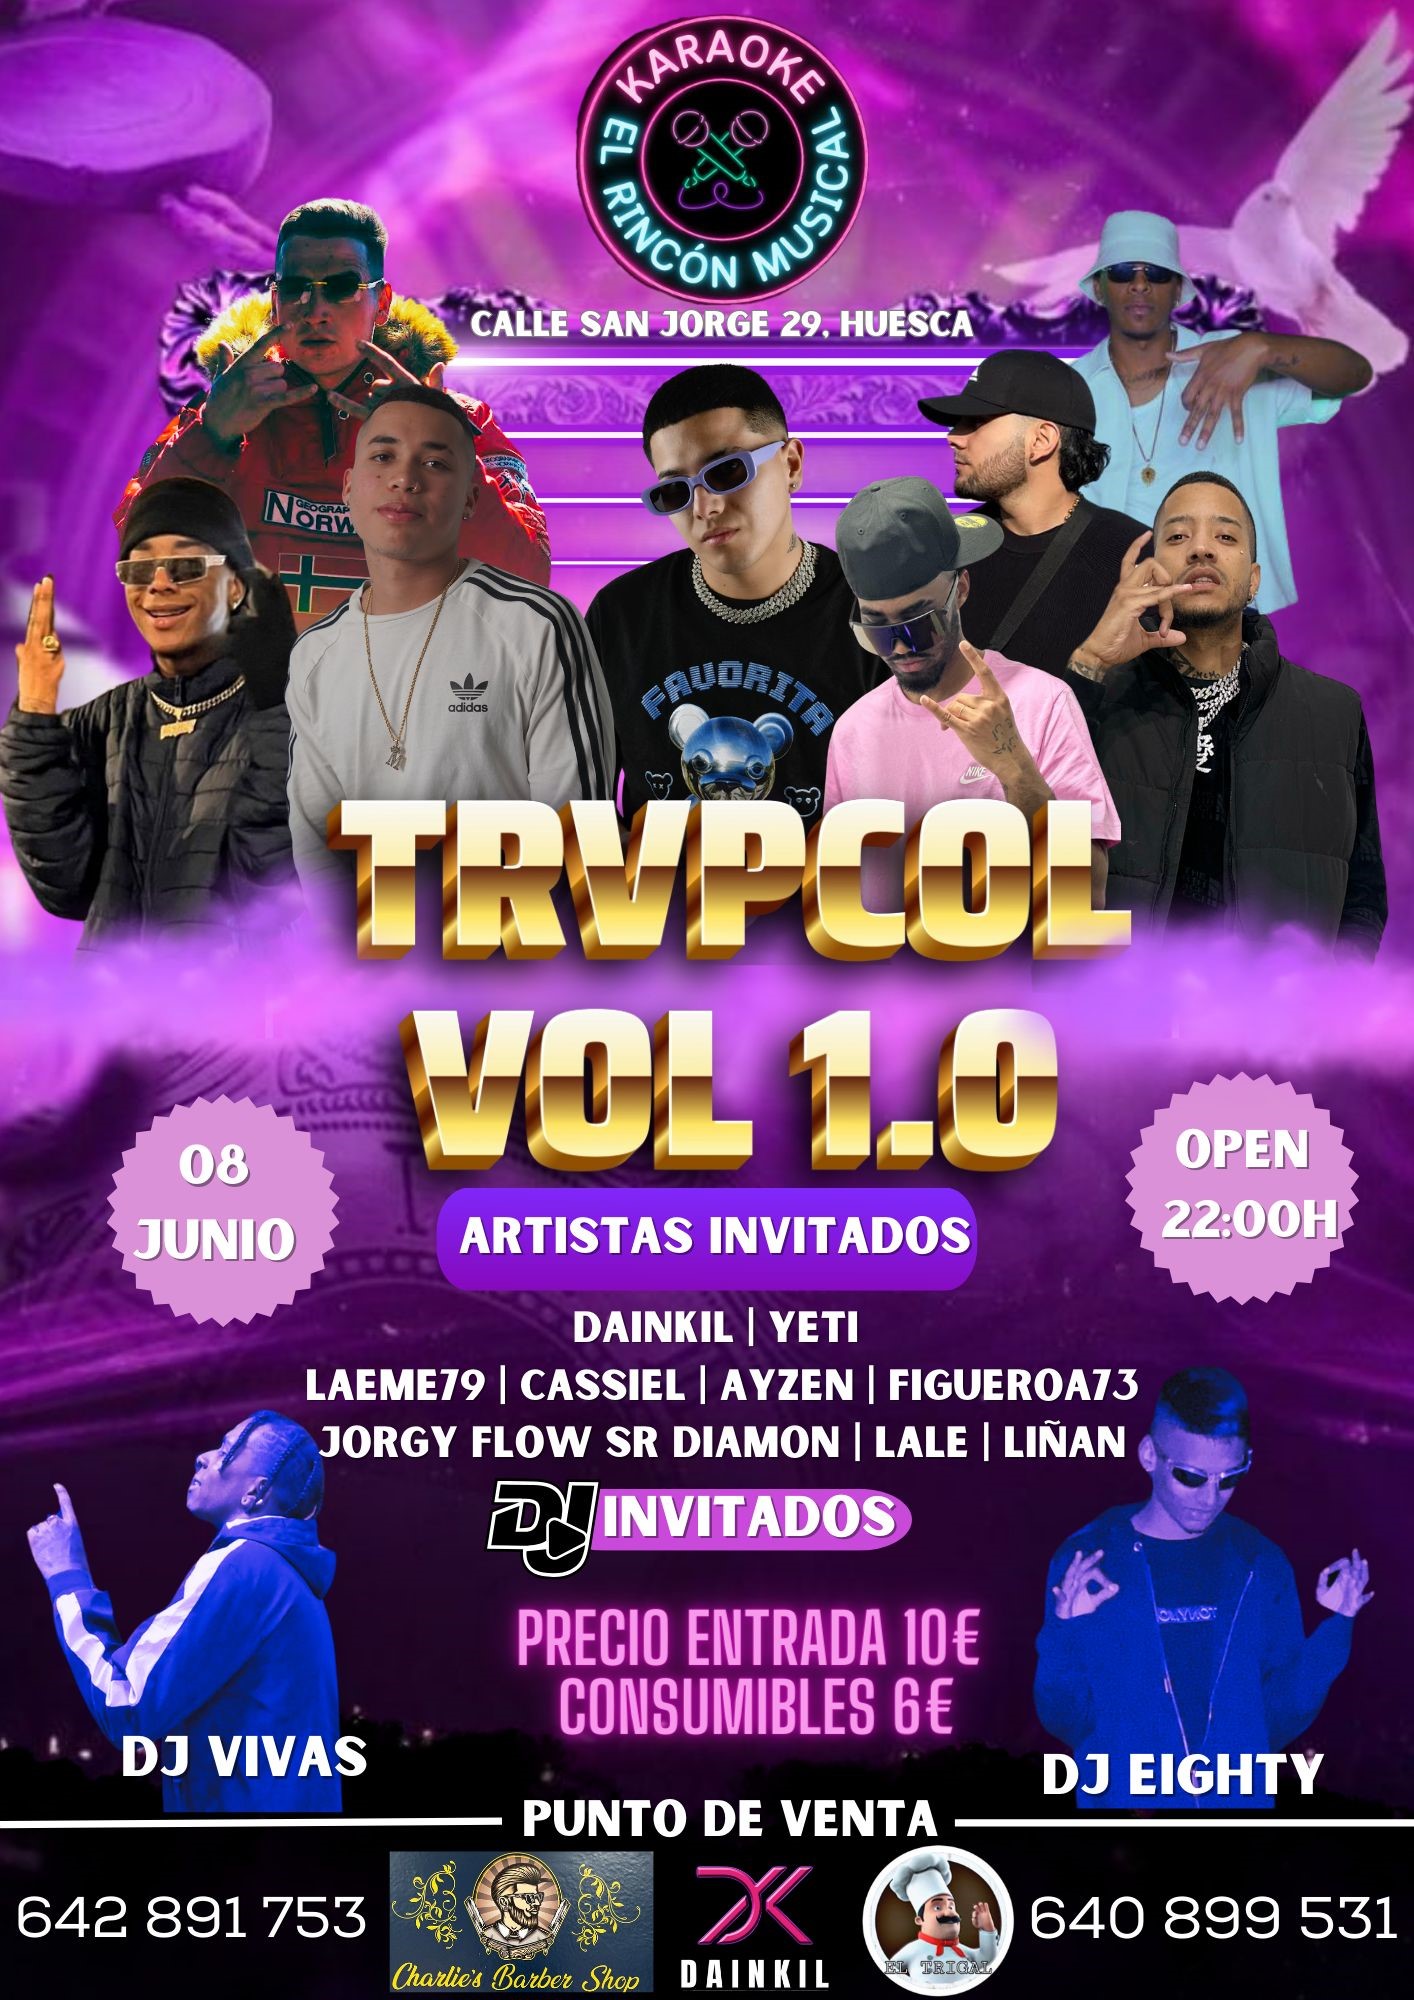 TRVPCOL VOL 1.0  on juin 08, 00:00@Karaoke el Rincón Musical - Achetez des billets et obtenez des informations surkaraoke_elrinconmusical 